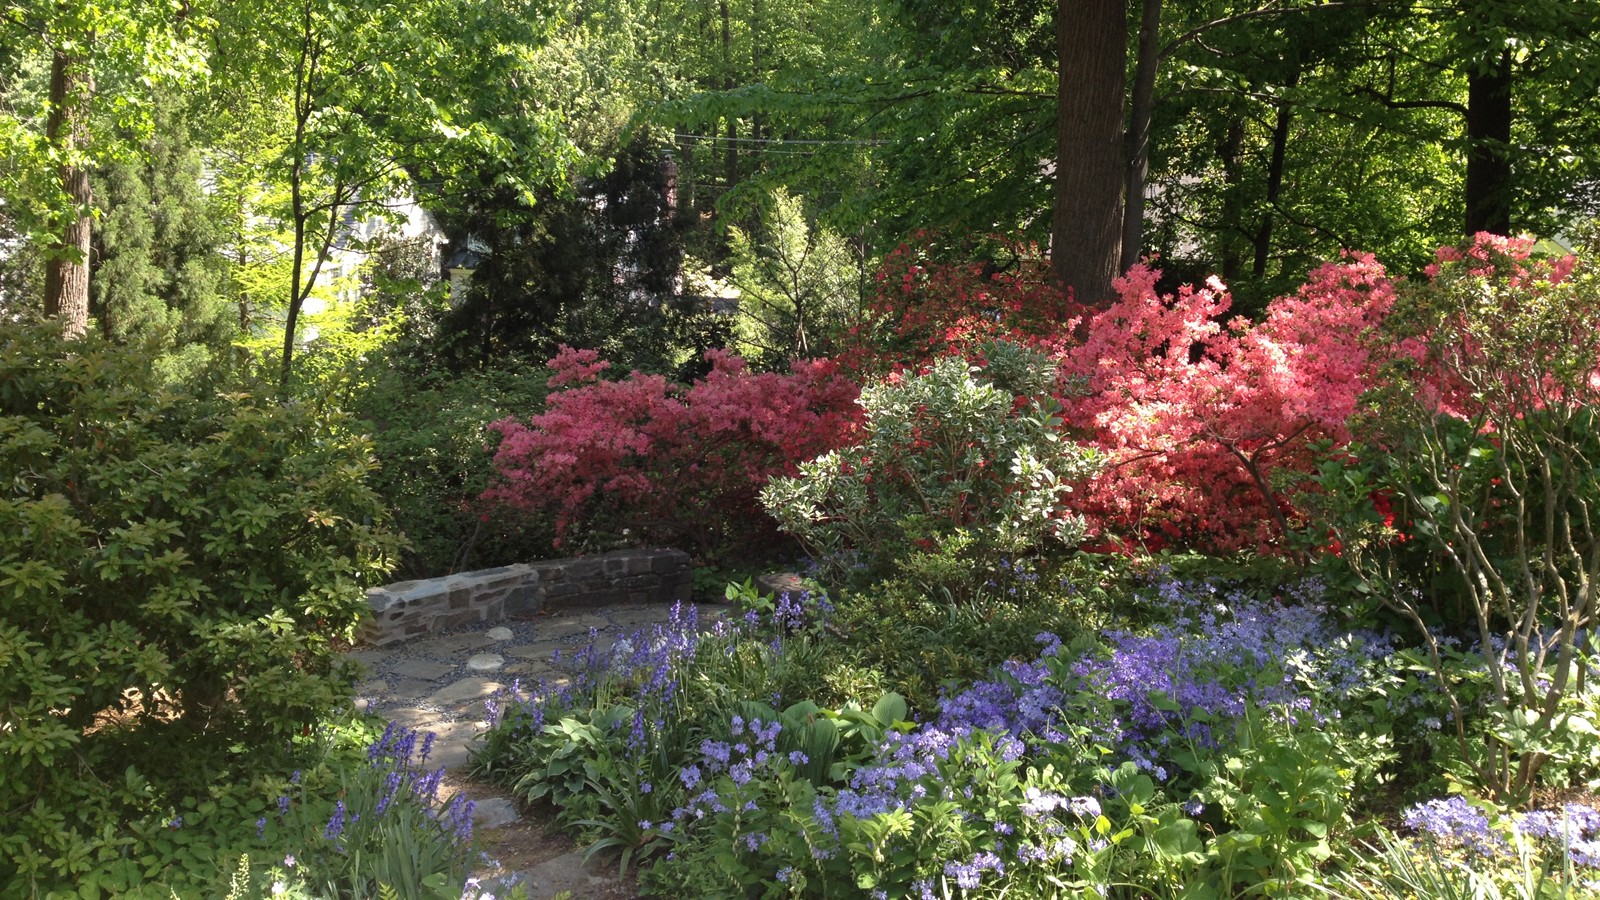 The Boasberg garden in May